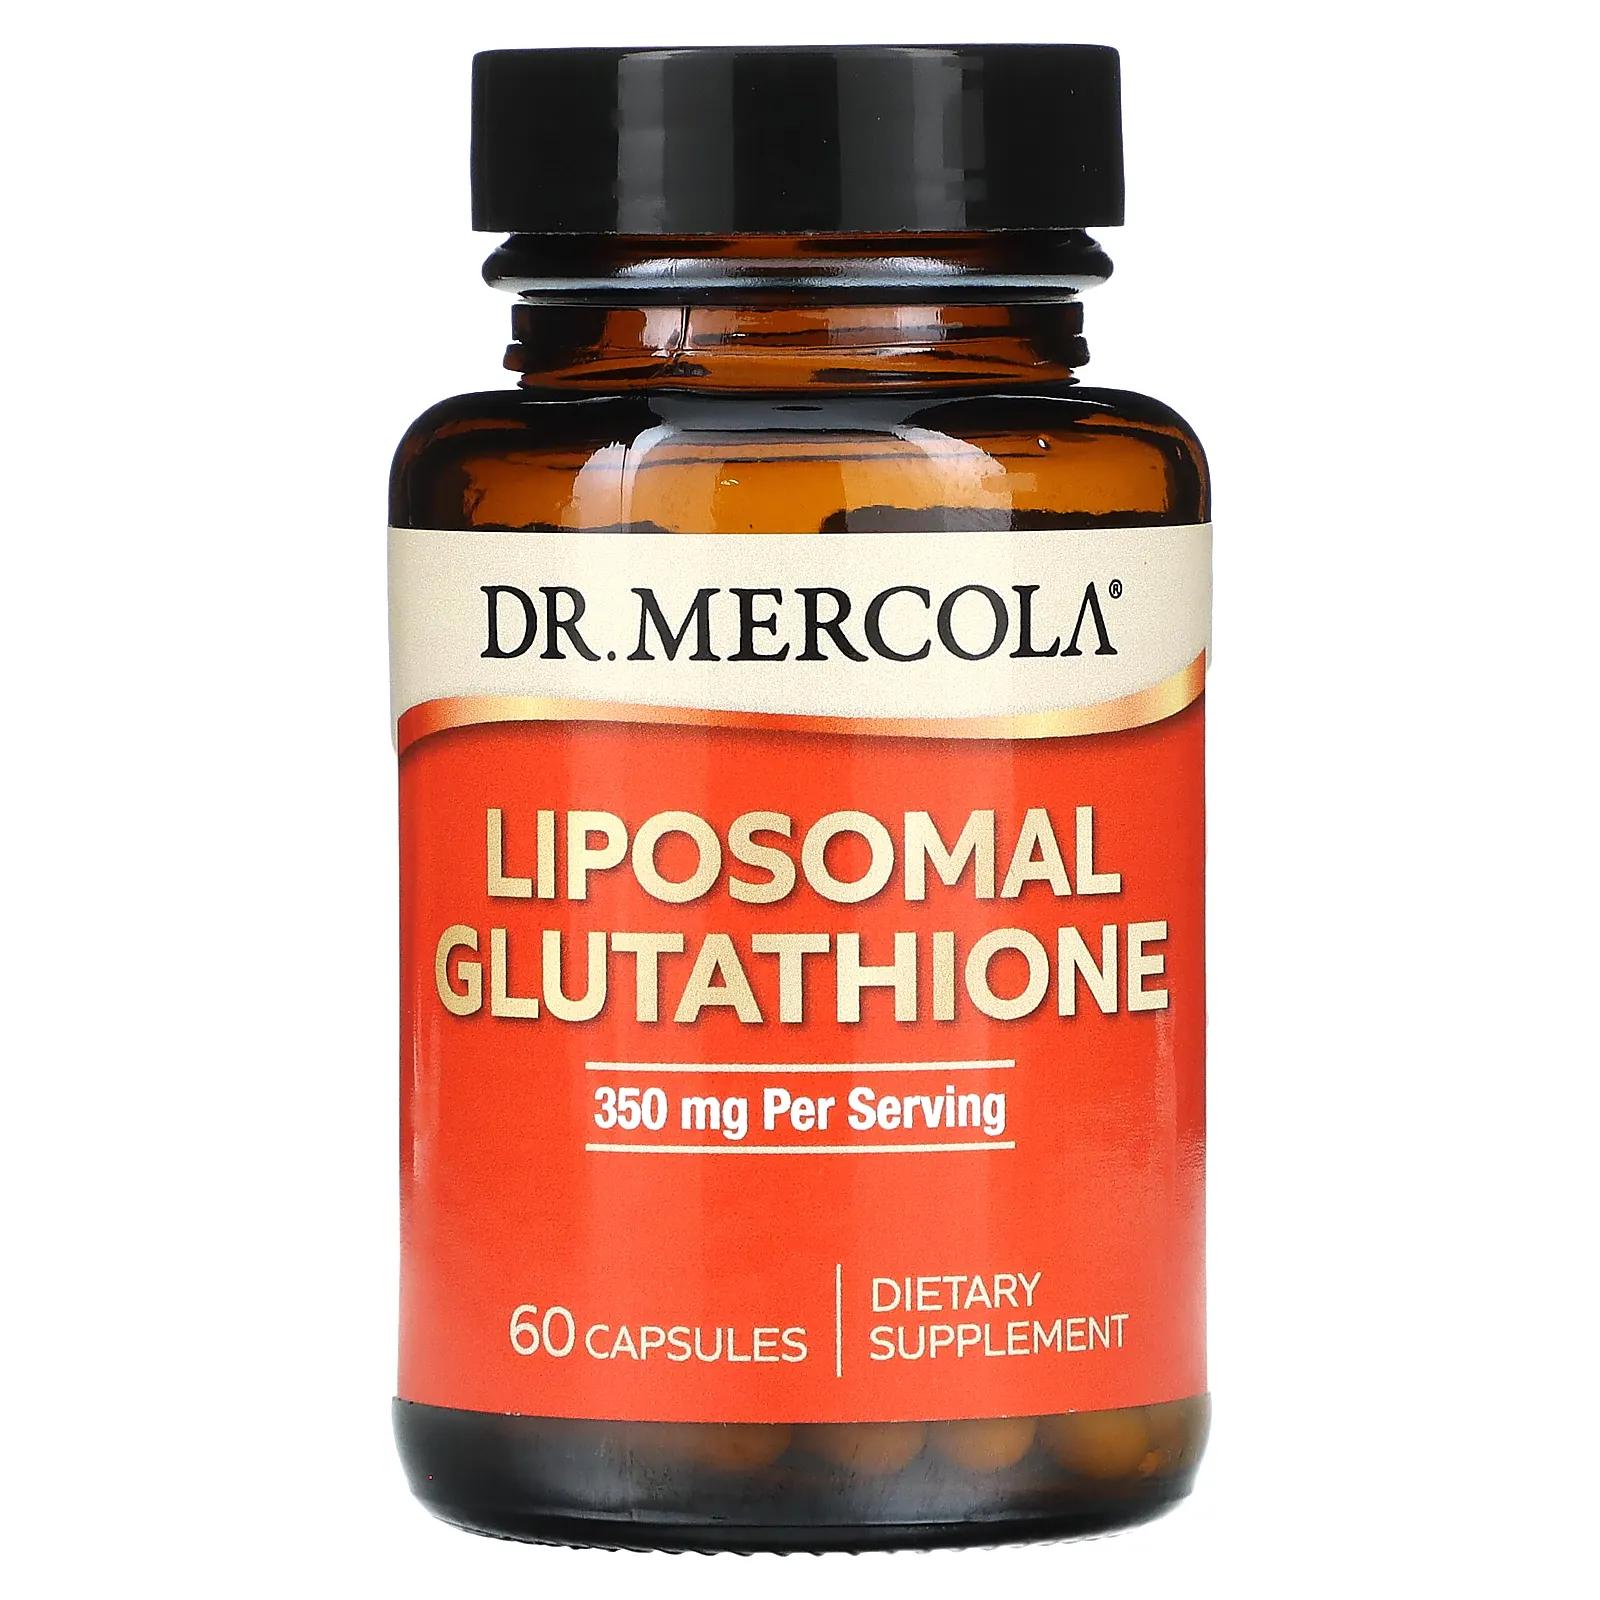 Dr. Mercola Липосомальный глутатион 175 мг 60 капсул dr mercola липосомальный глутатион 175 мг 60 капсул